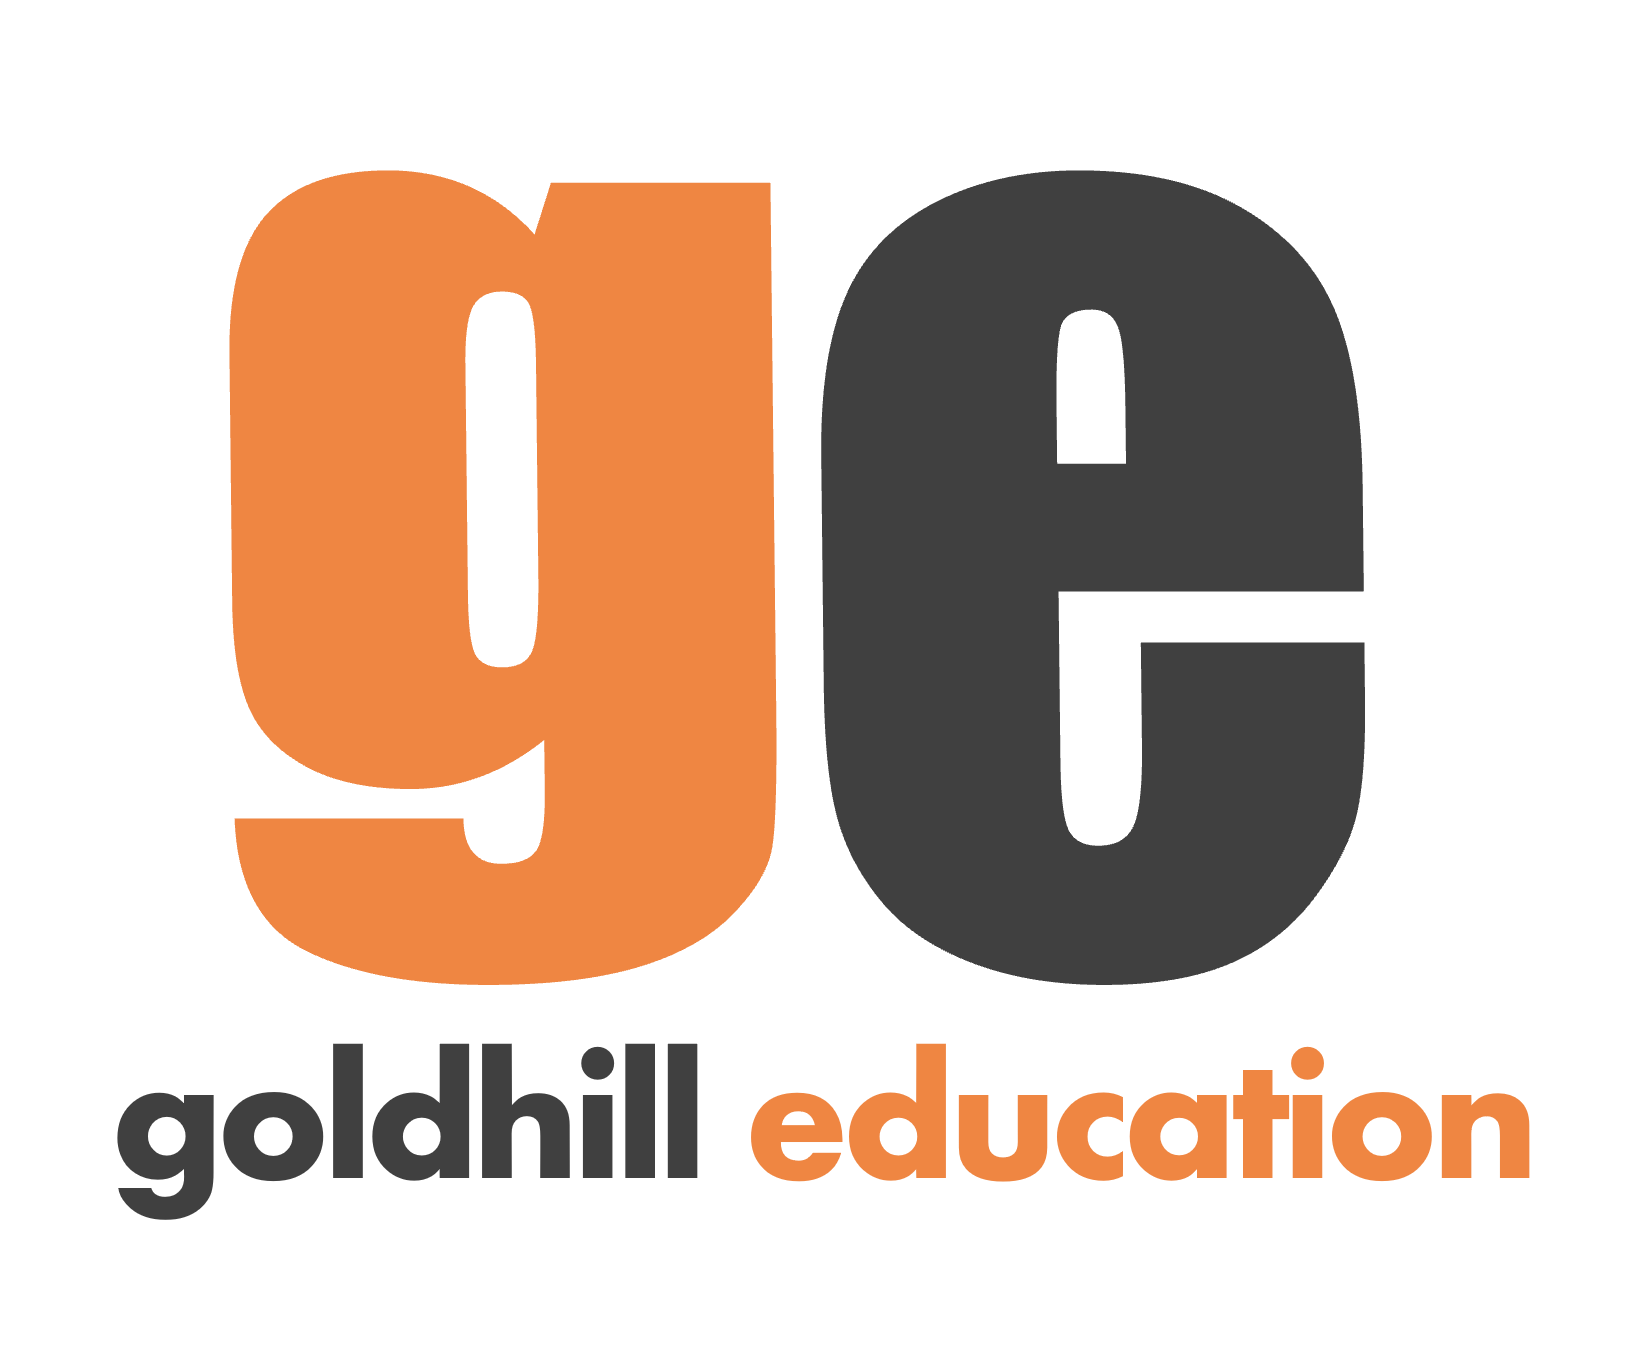 Goldhill Education